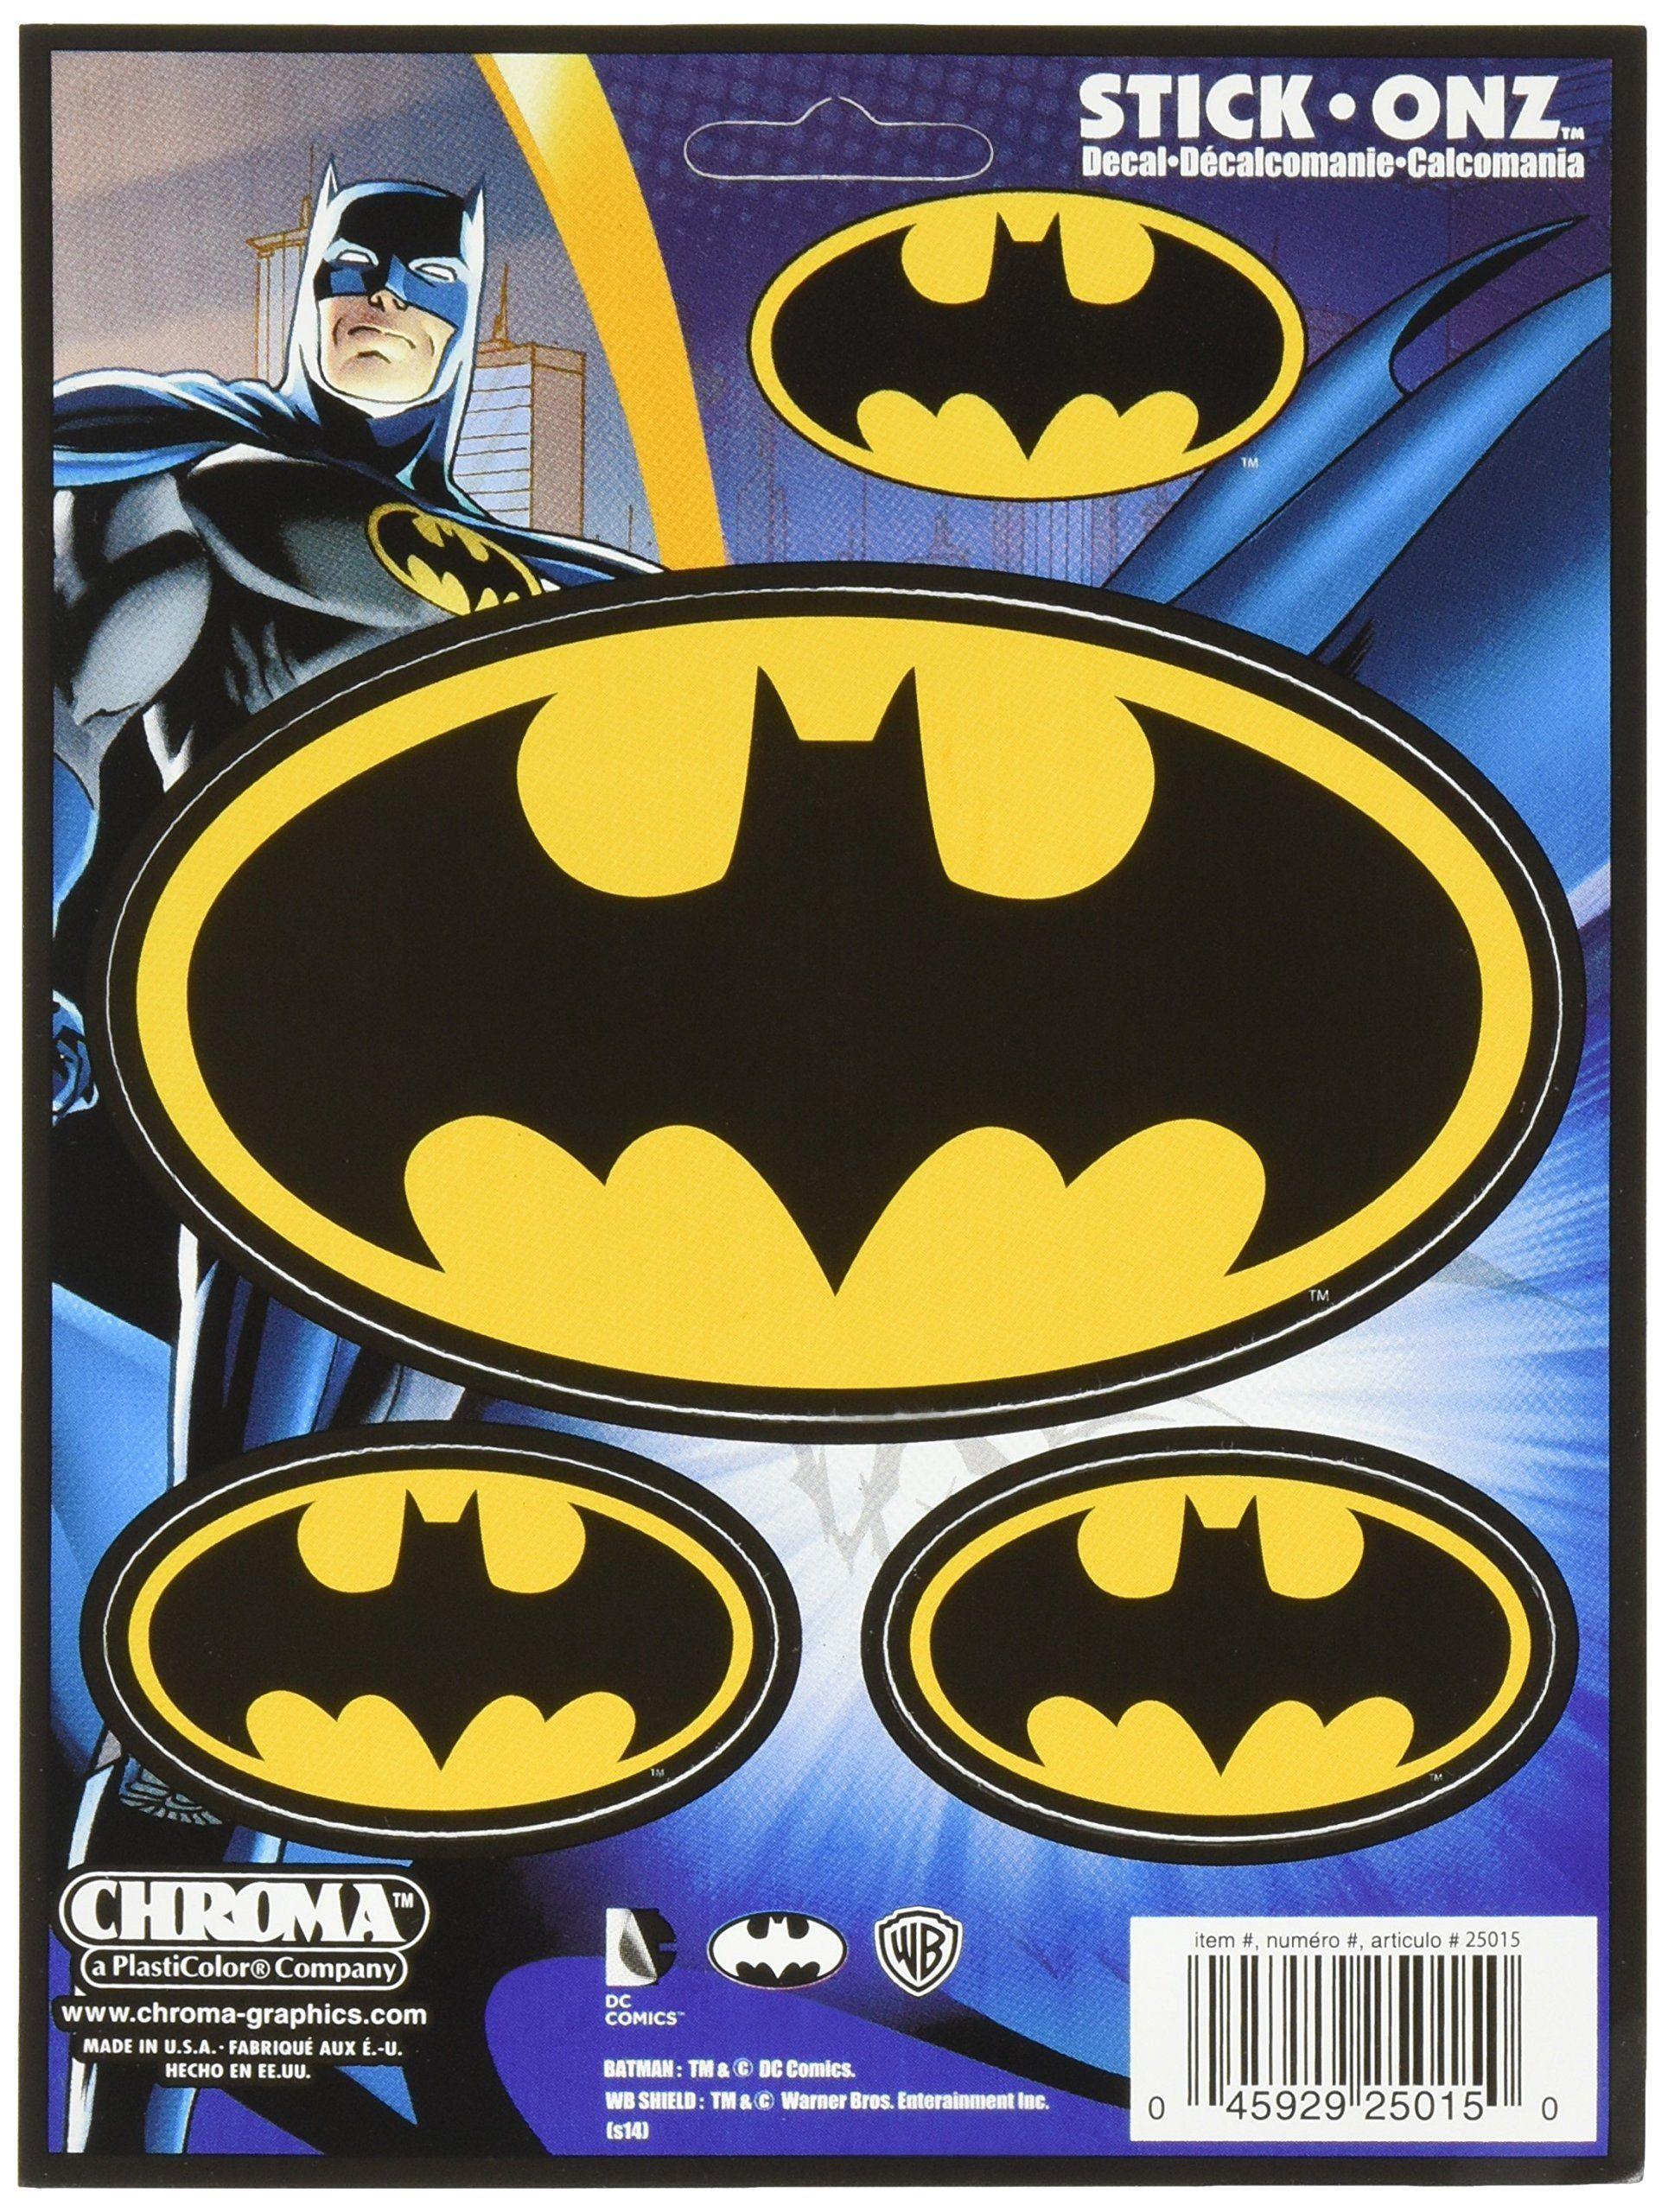 Gold and Black Batman Logo - Amazon.com: Chroma Black and Gold 25015 Batman Logo 3pc Stick Onz ...